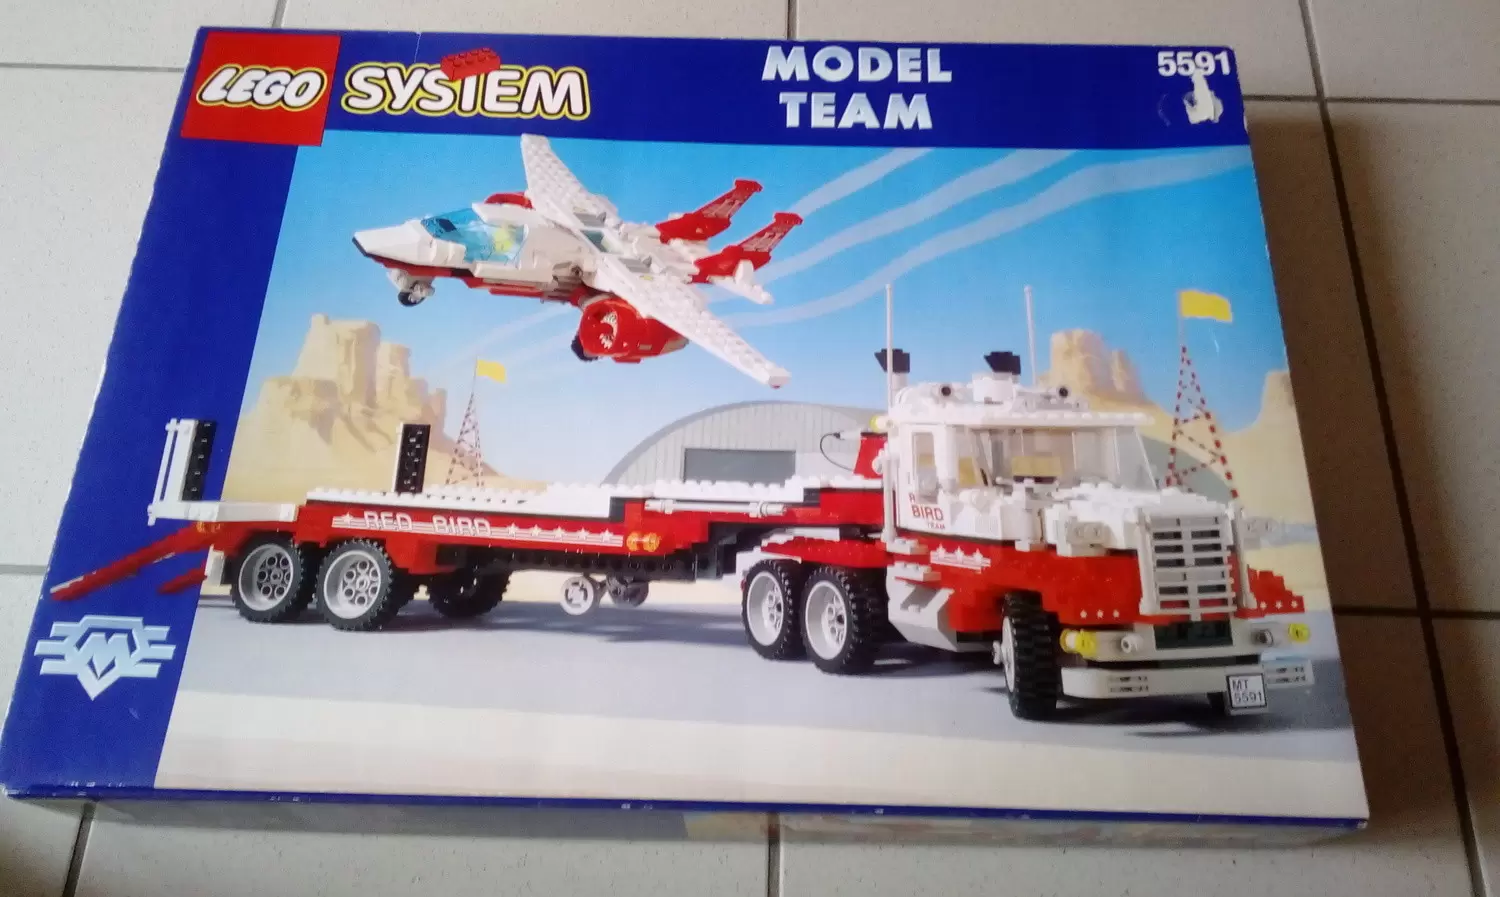 LEGO System - Model Team